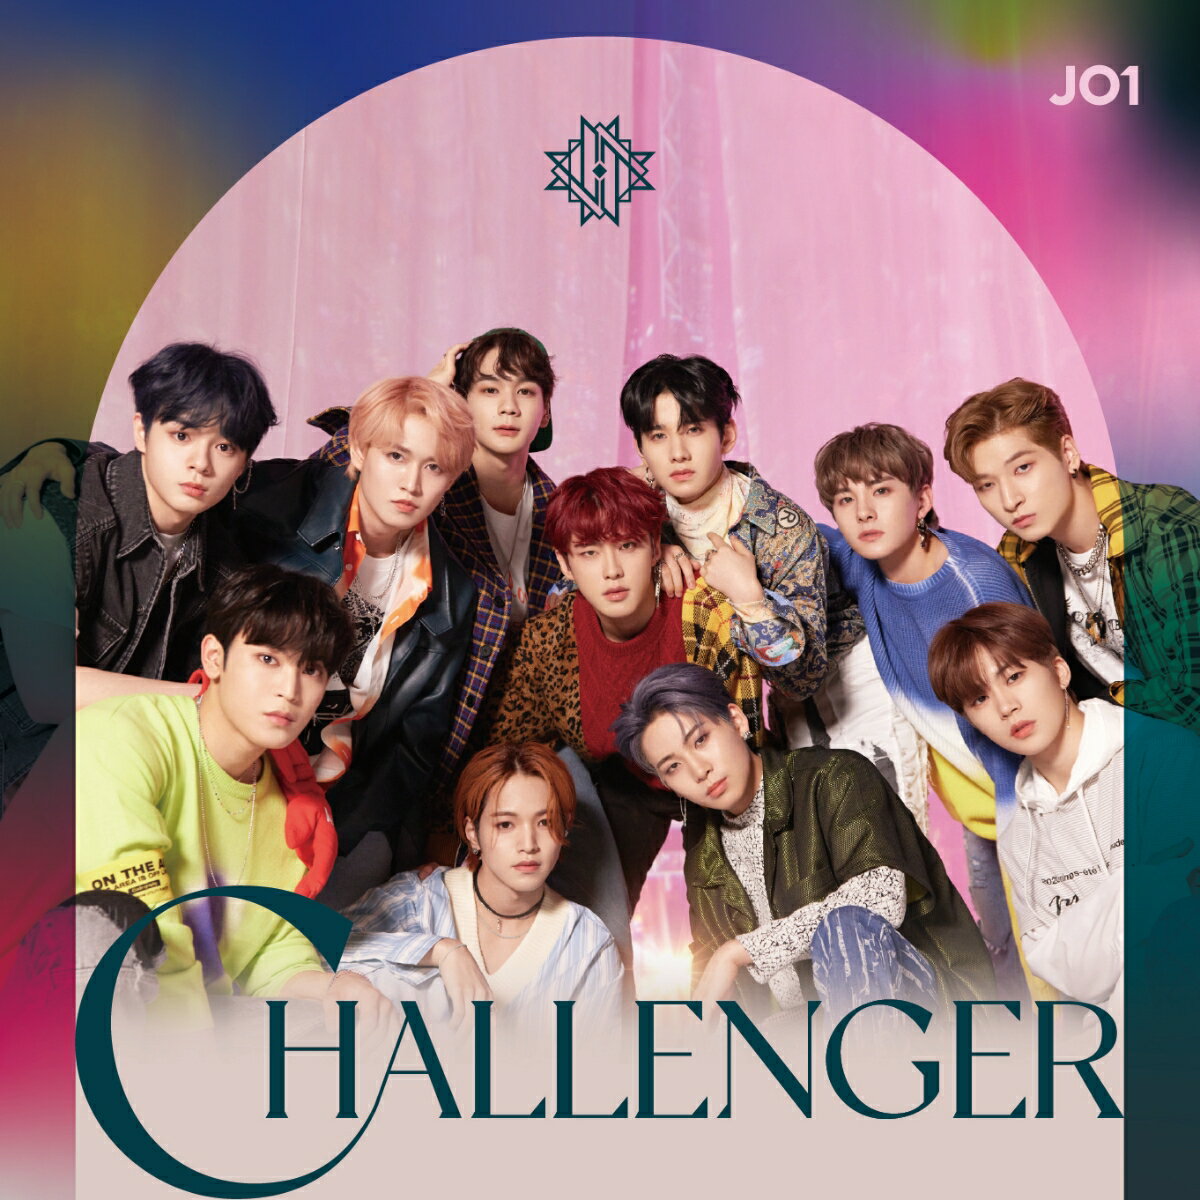 CHALLENGER (通常盤 CD ONLY) JO1